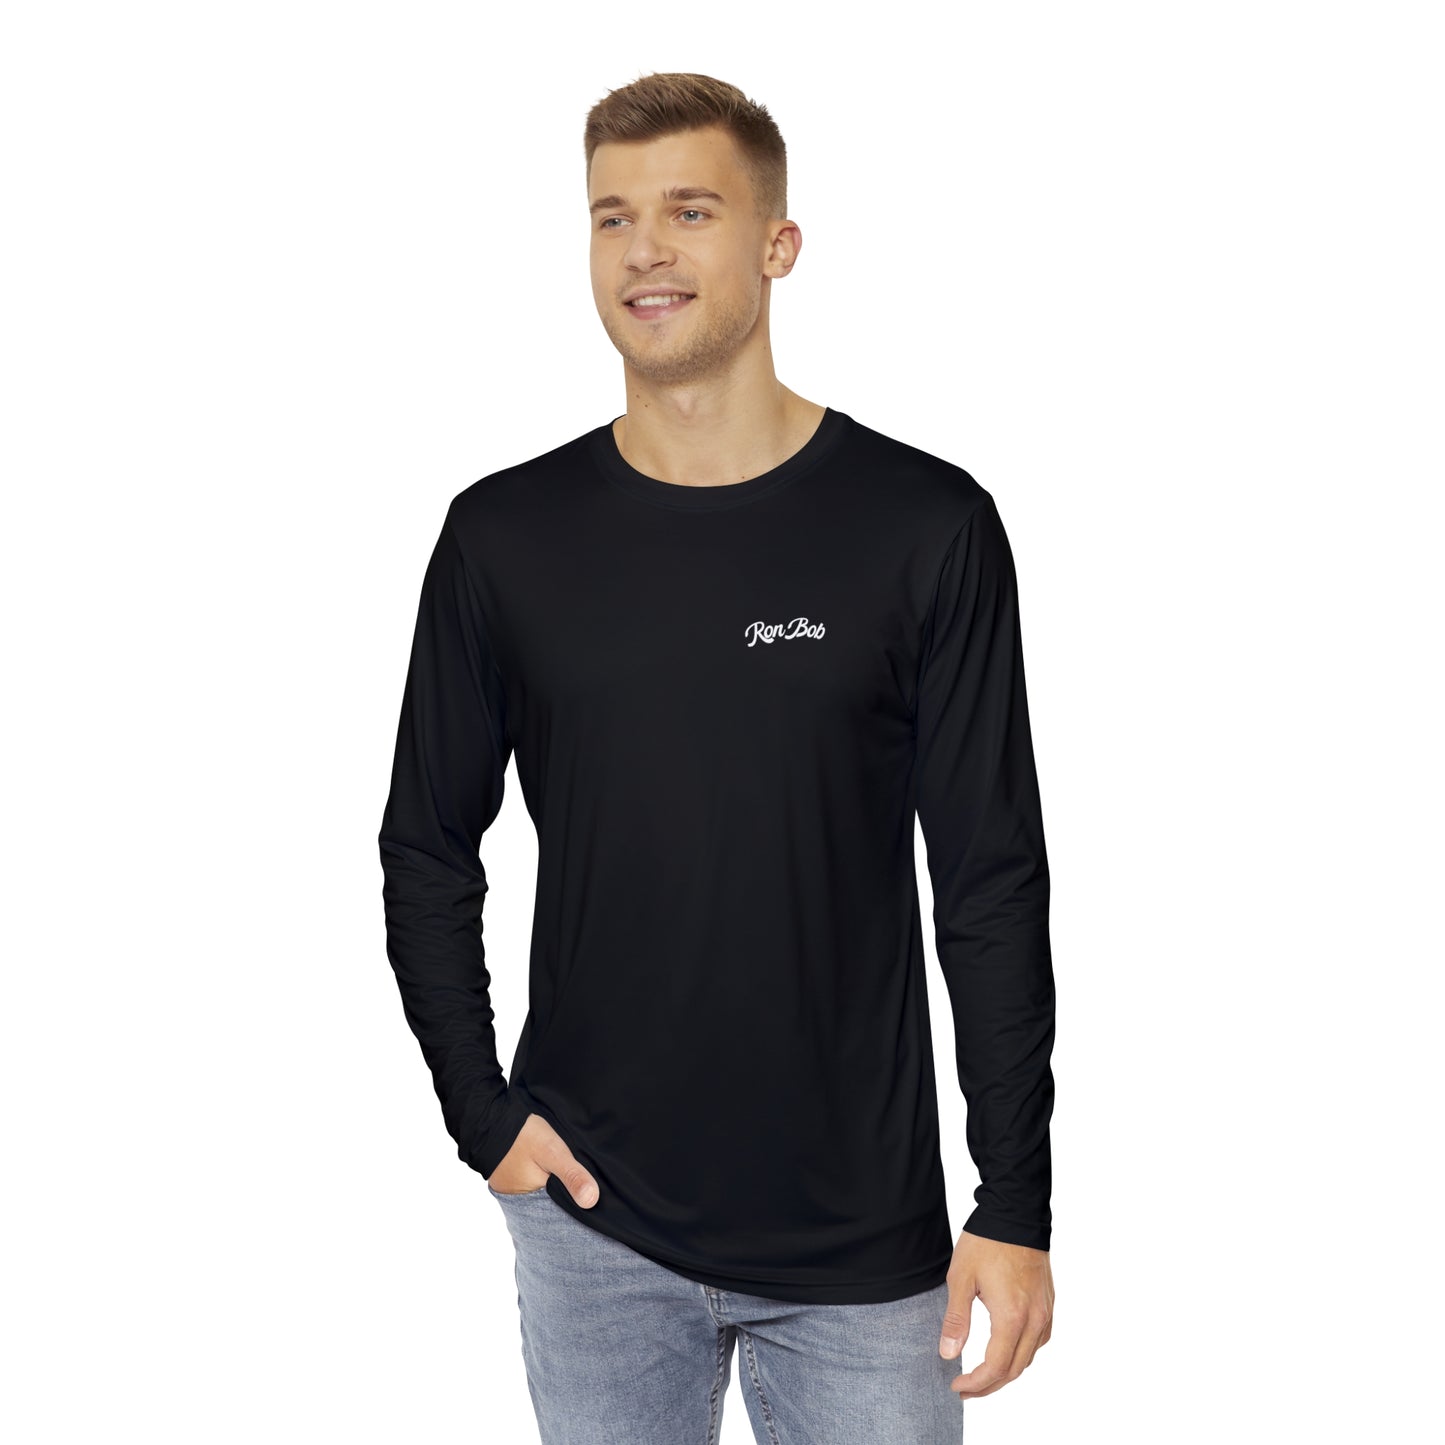 Polyester Men's Long Sleeve Shirt with Black/White Logo (Black)